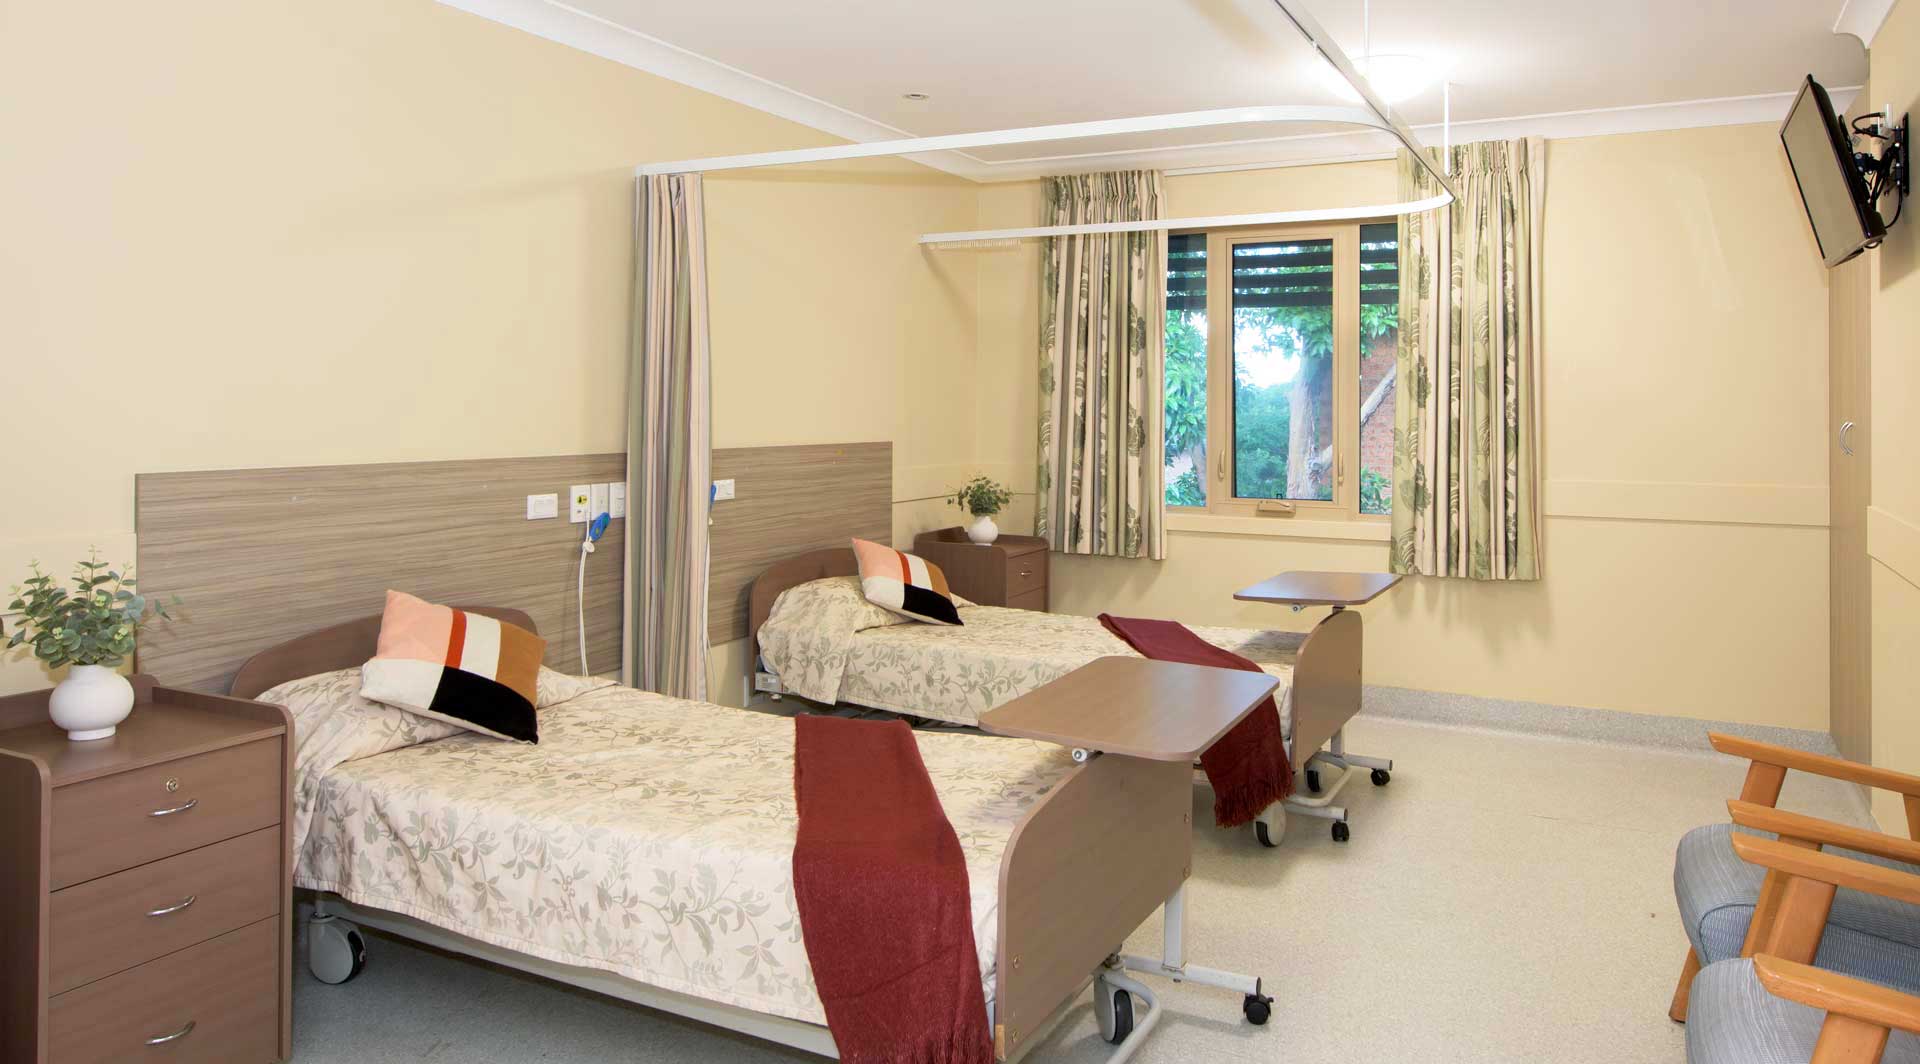 Hixson Gardens Aged Care Facility, Bankstown | Arete Health Care